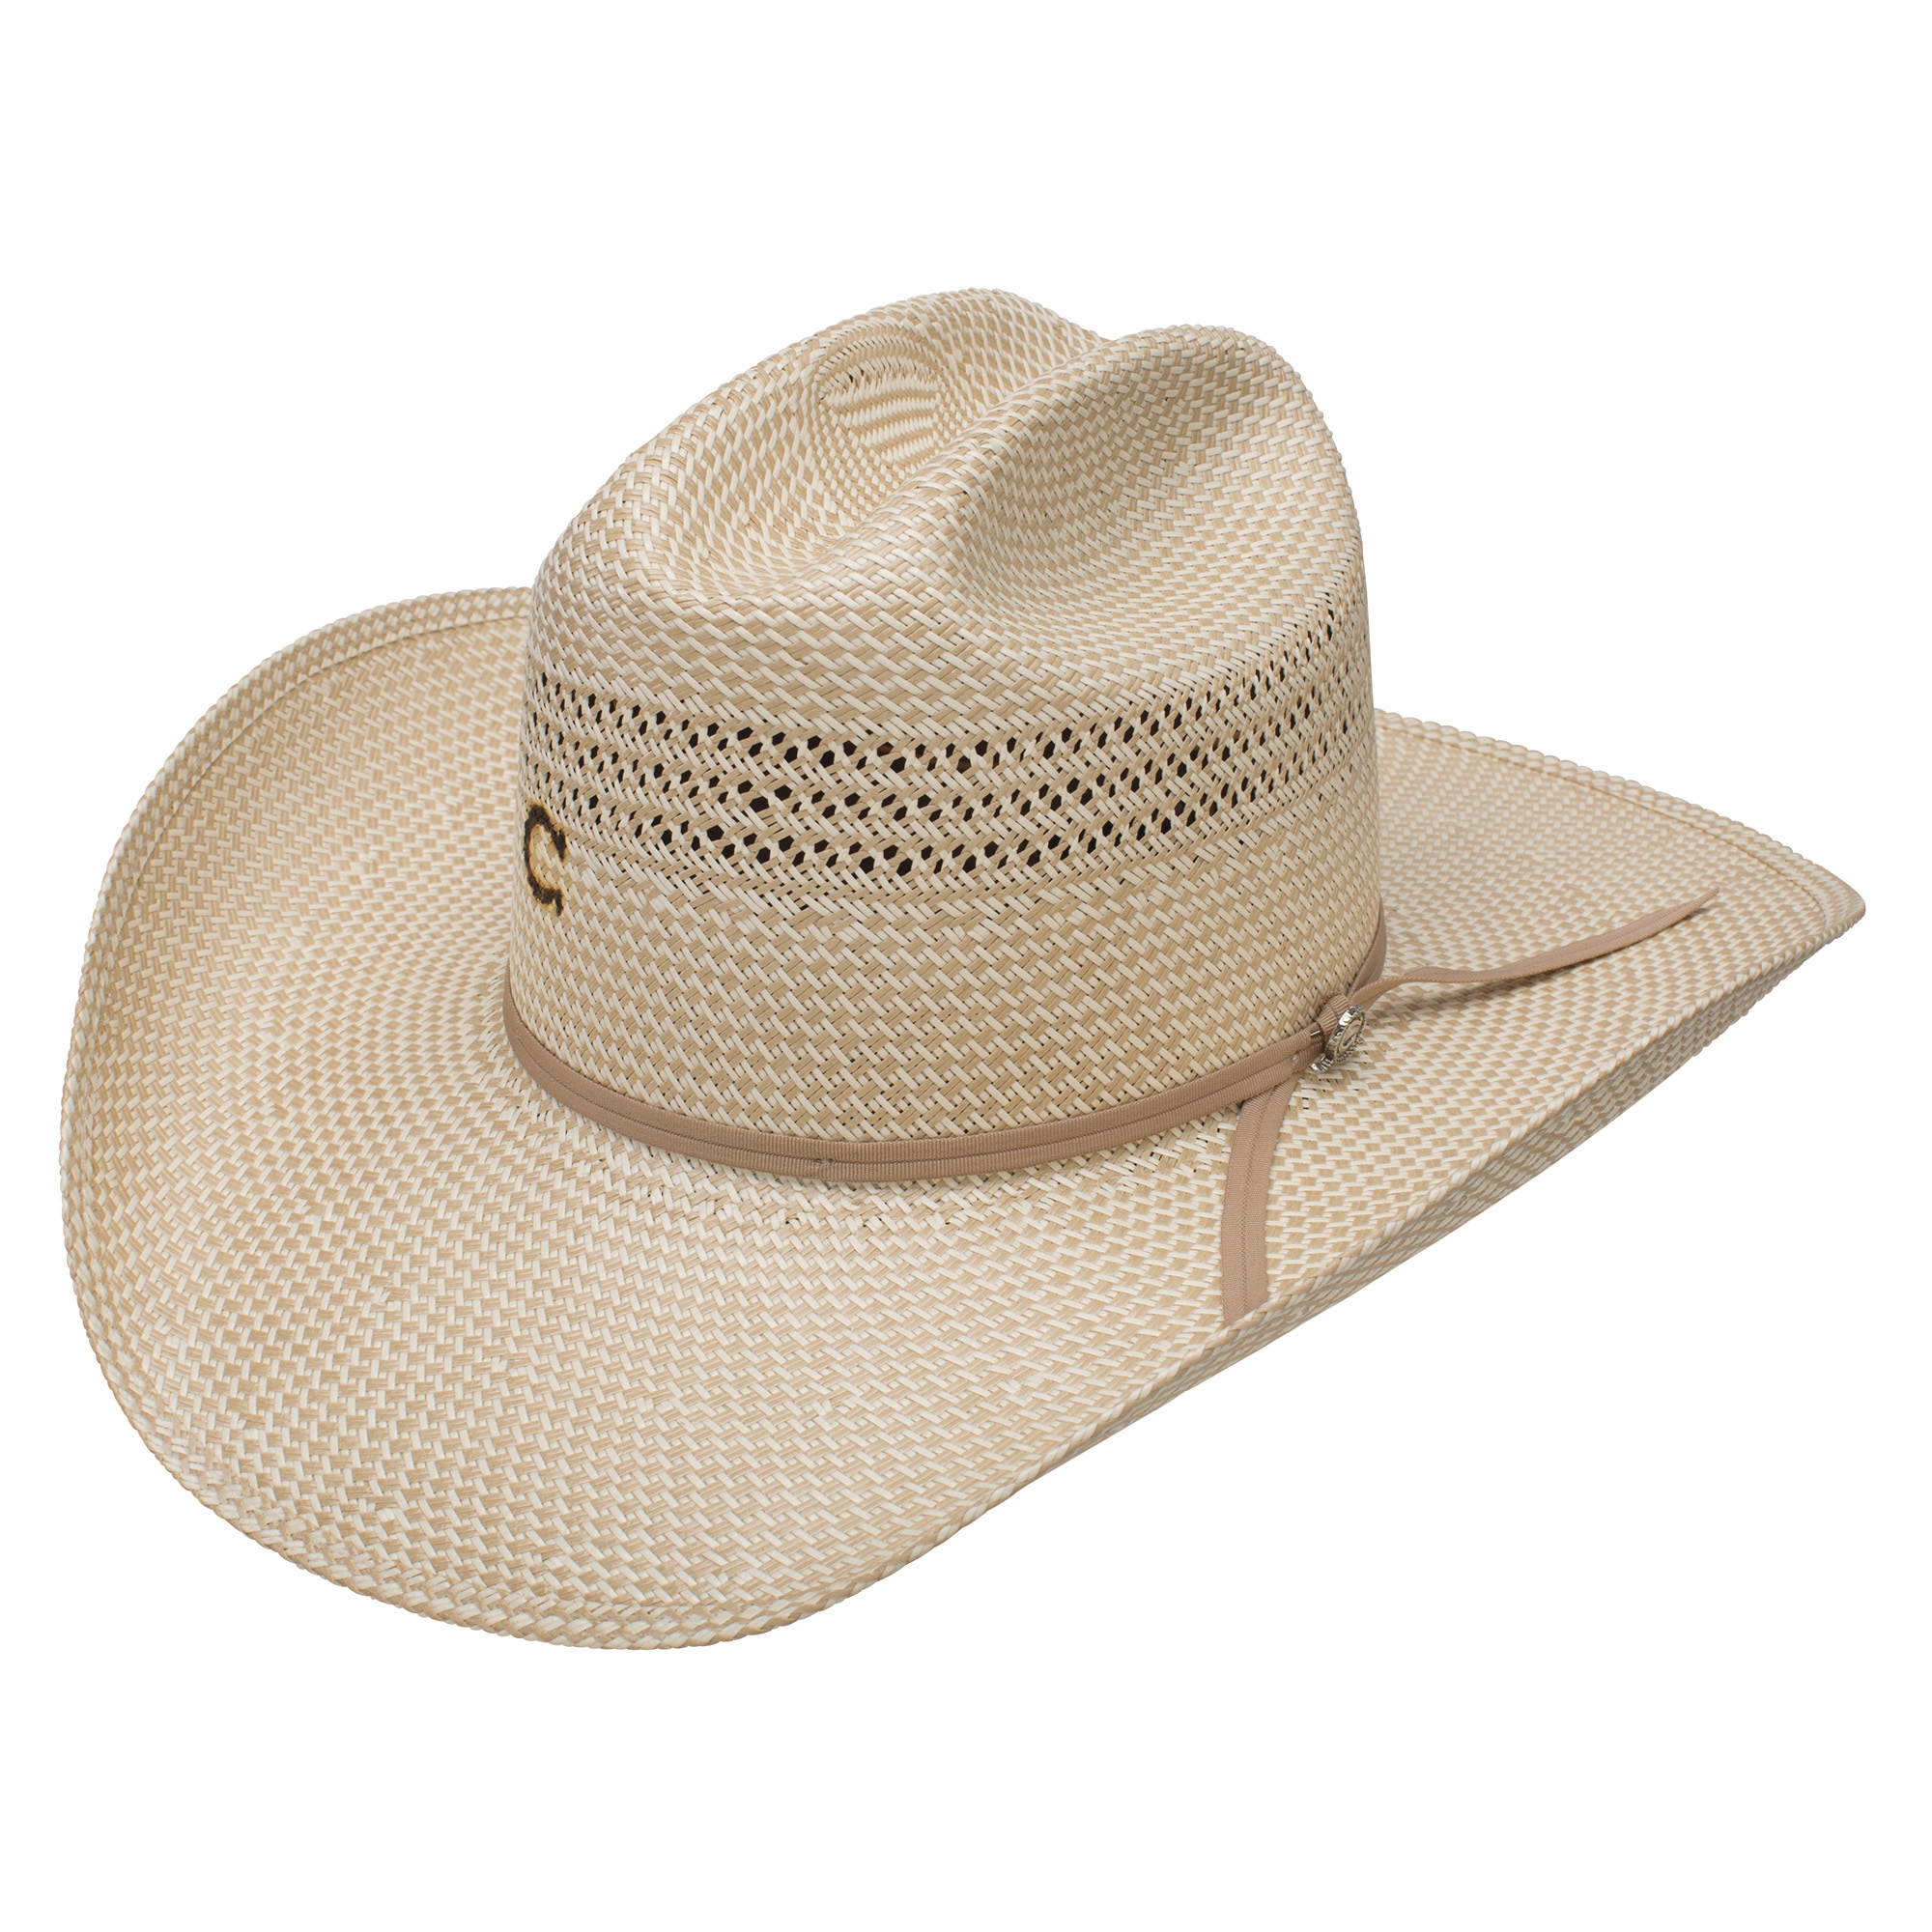 Charlie 1 Horse High Call - Straw Cowboy Hat